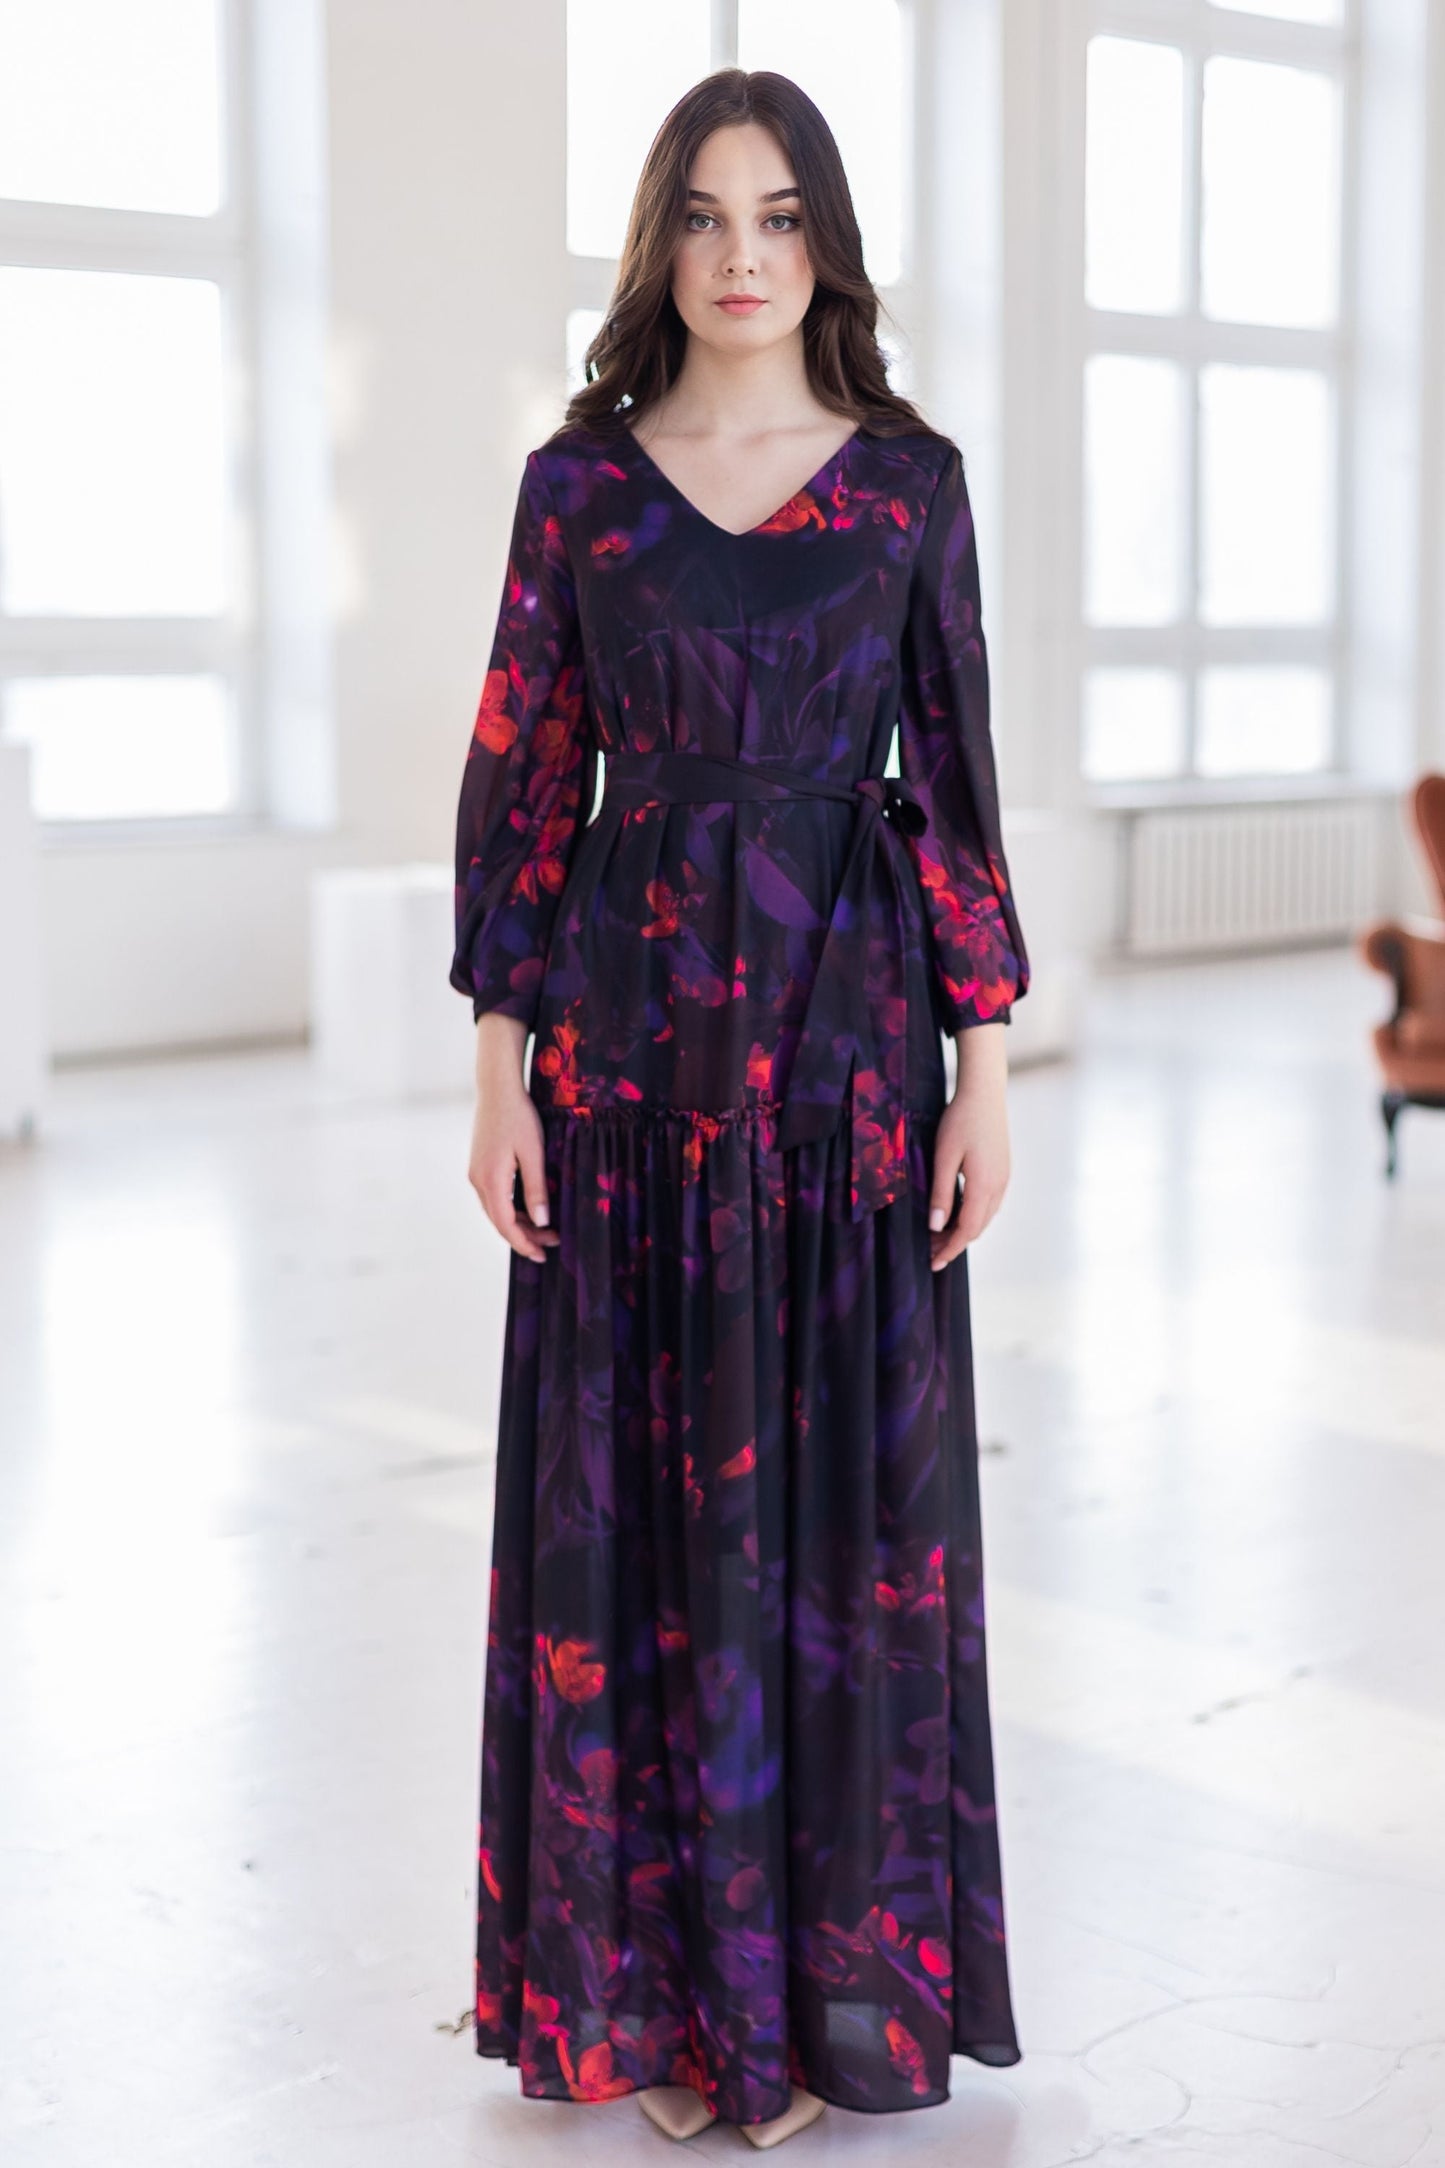 Chiffon Maxi dress in dark purple with flowers